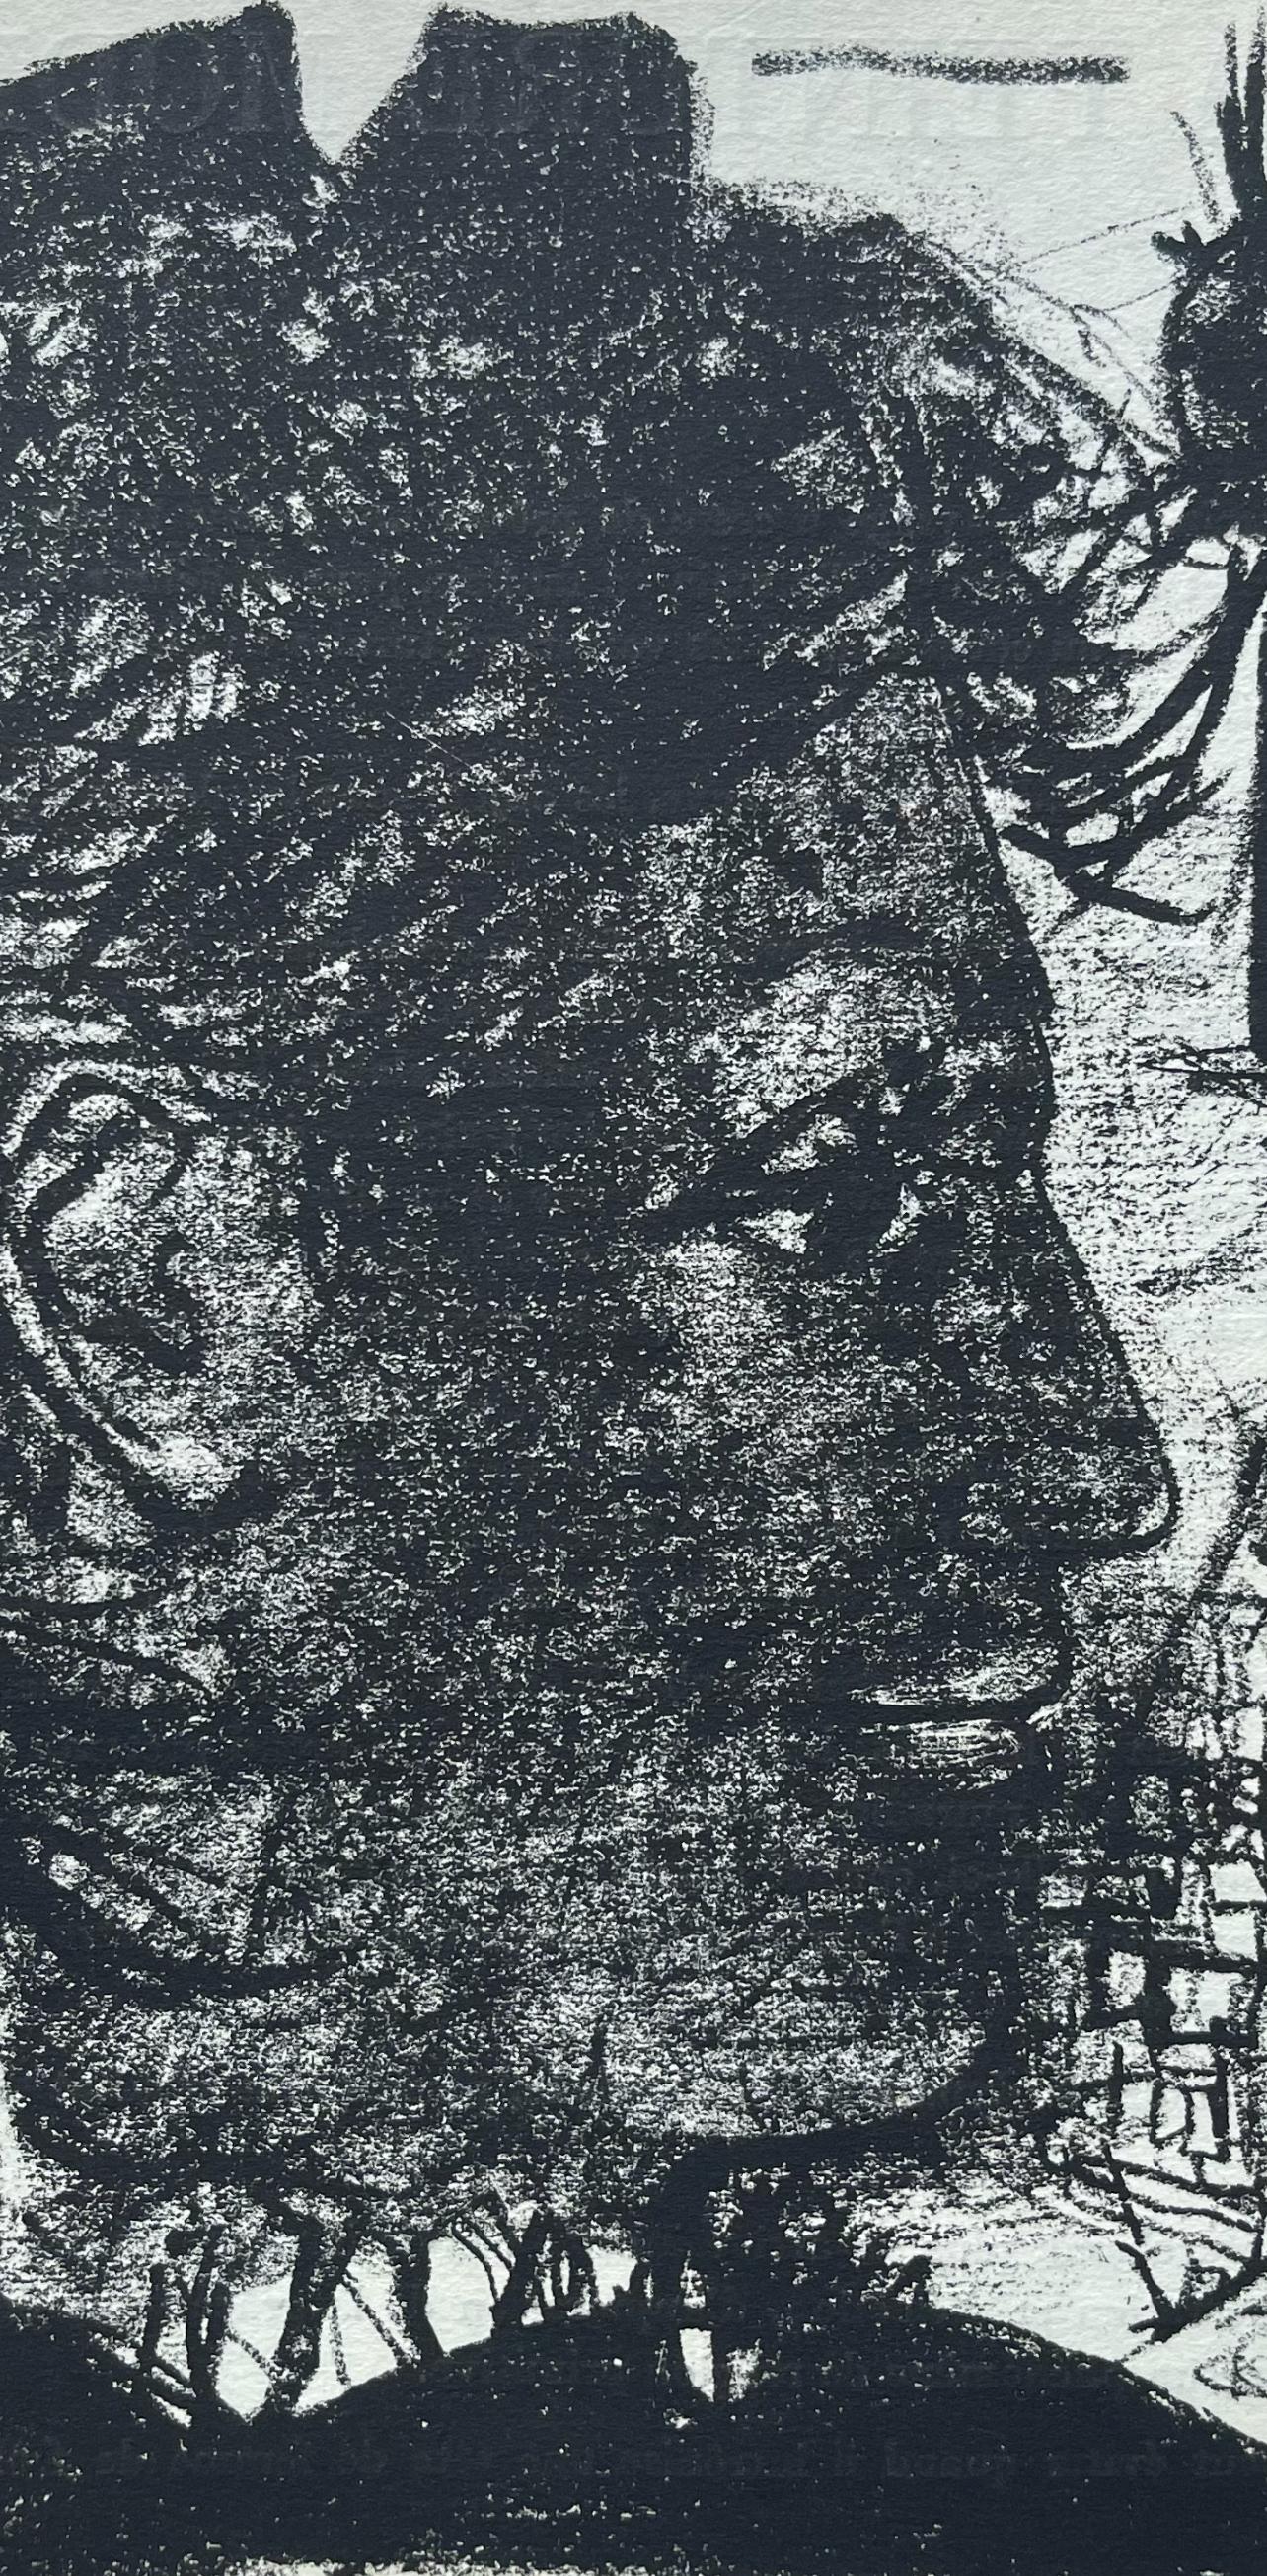 Marchand, Composition, pierre ã feu provence noire  (after) - Print by André Marchand